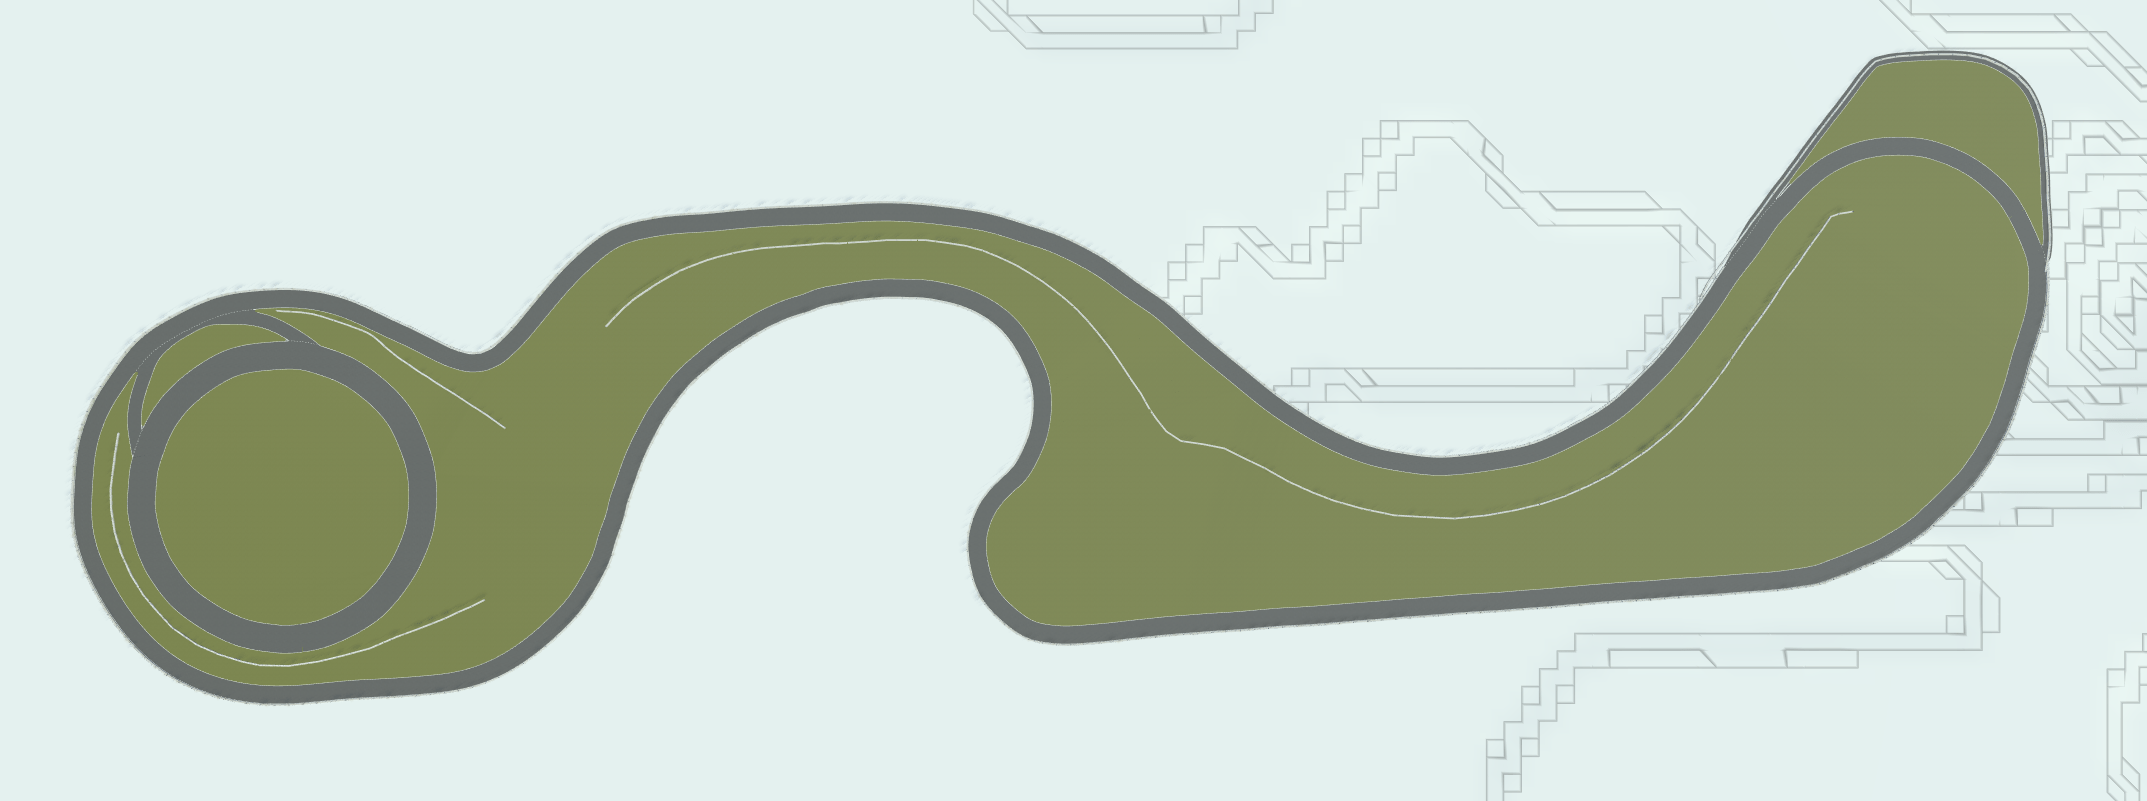 Test Track with terrain in RoadRunner